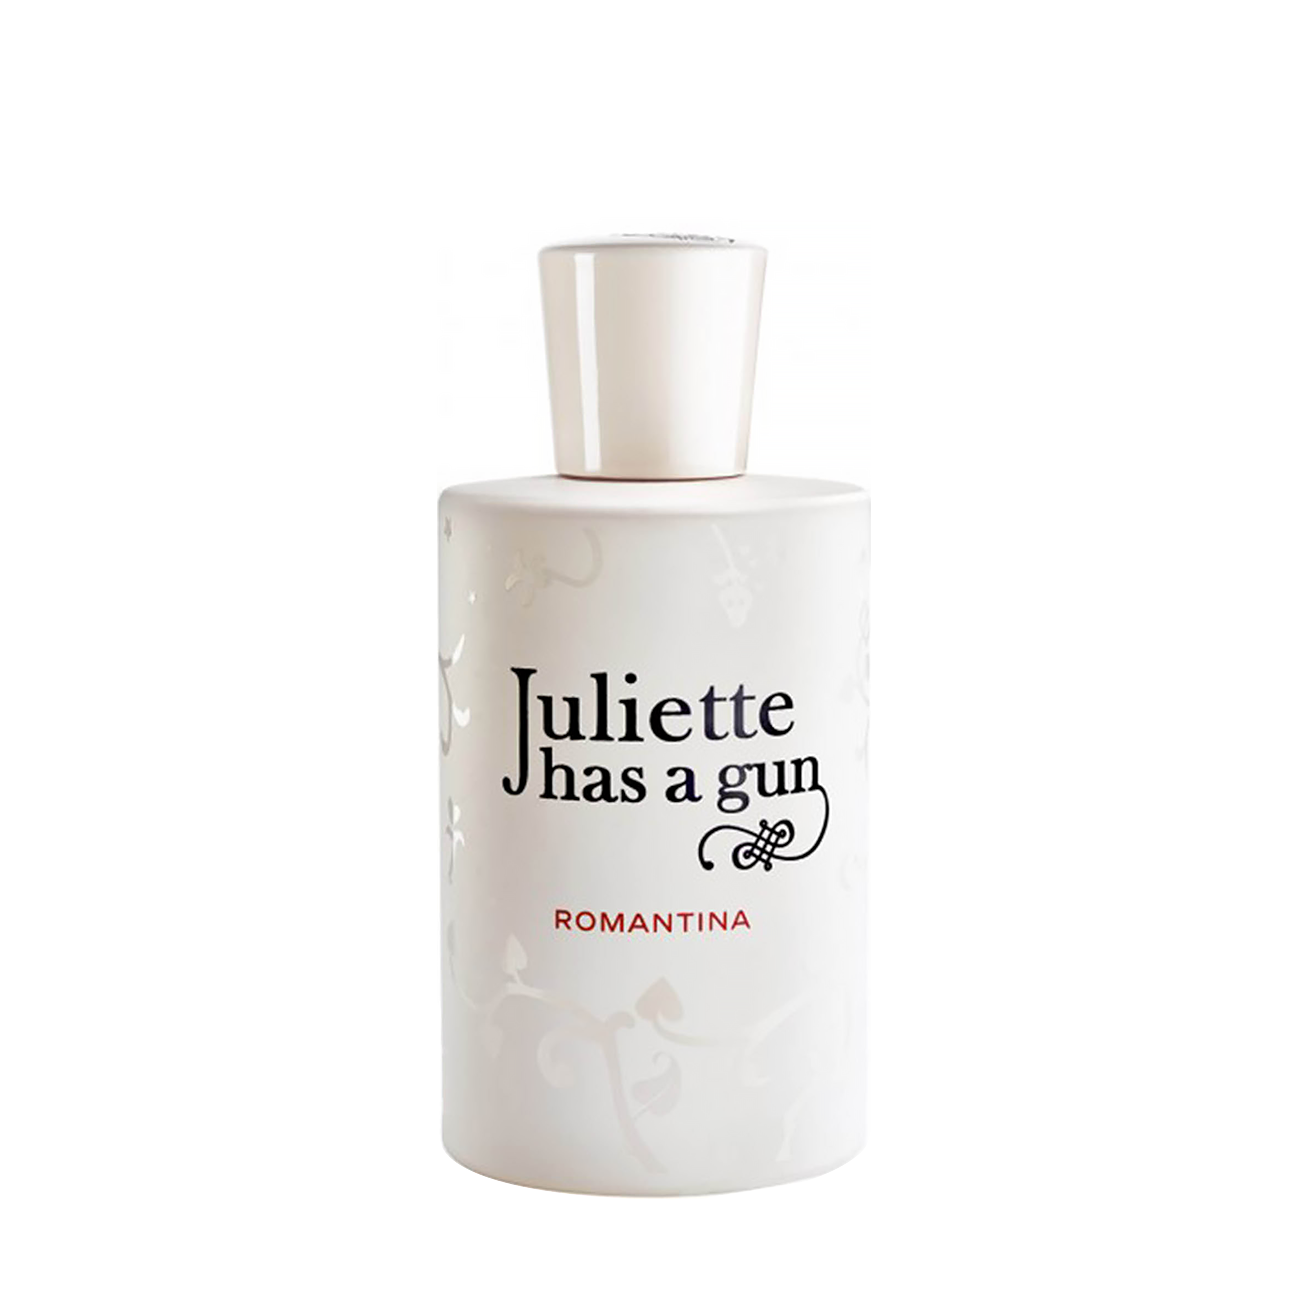 Parfum de niche Juliette has a gun ROMANTINA 100ml cu comanda online